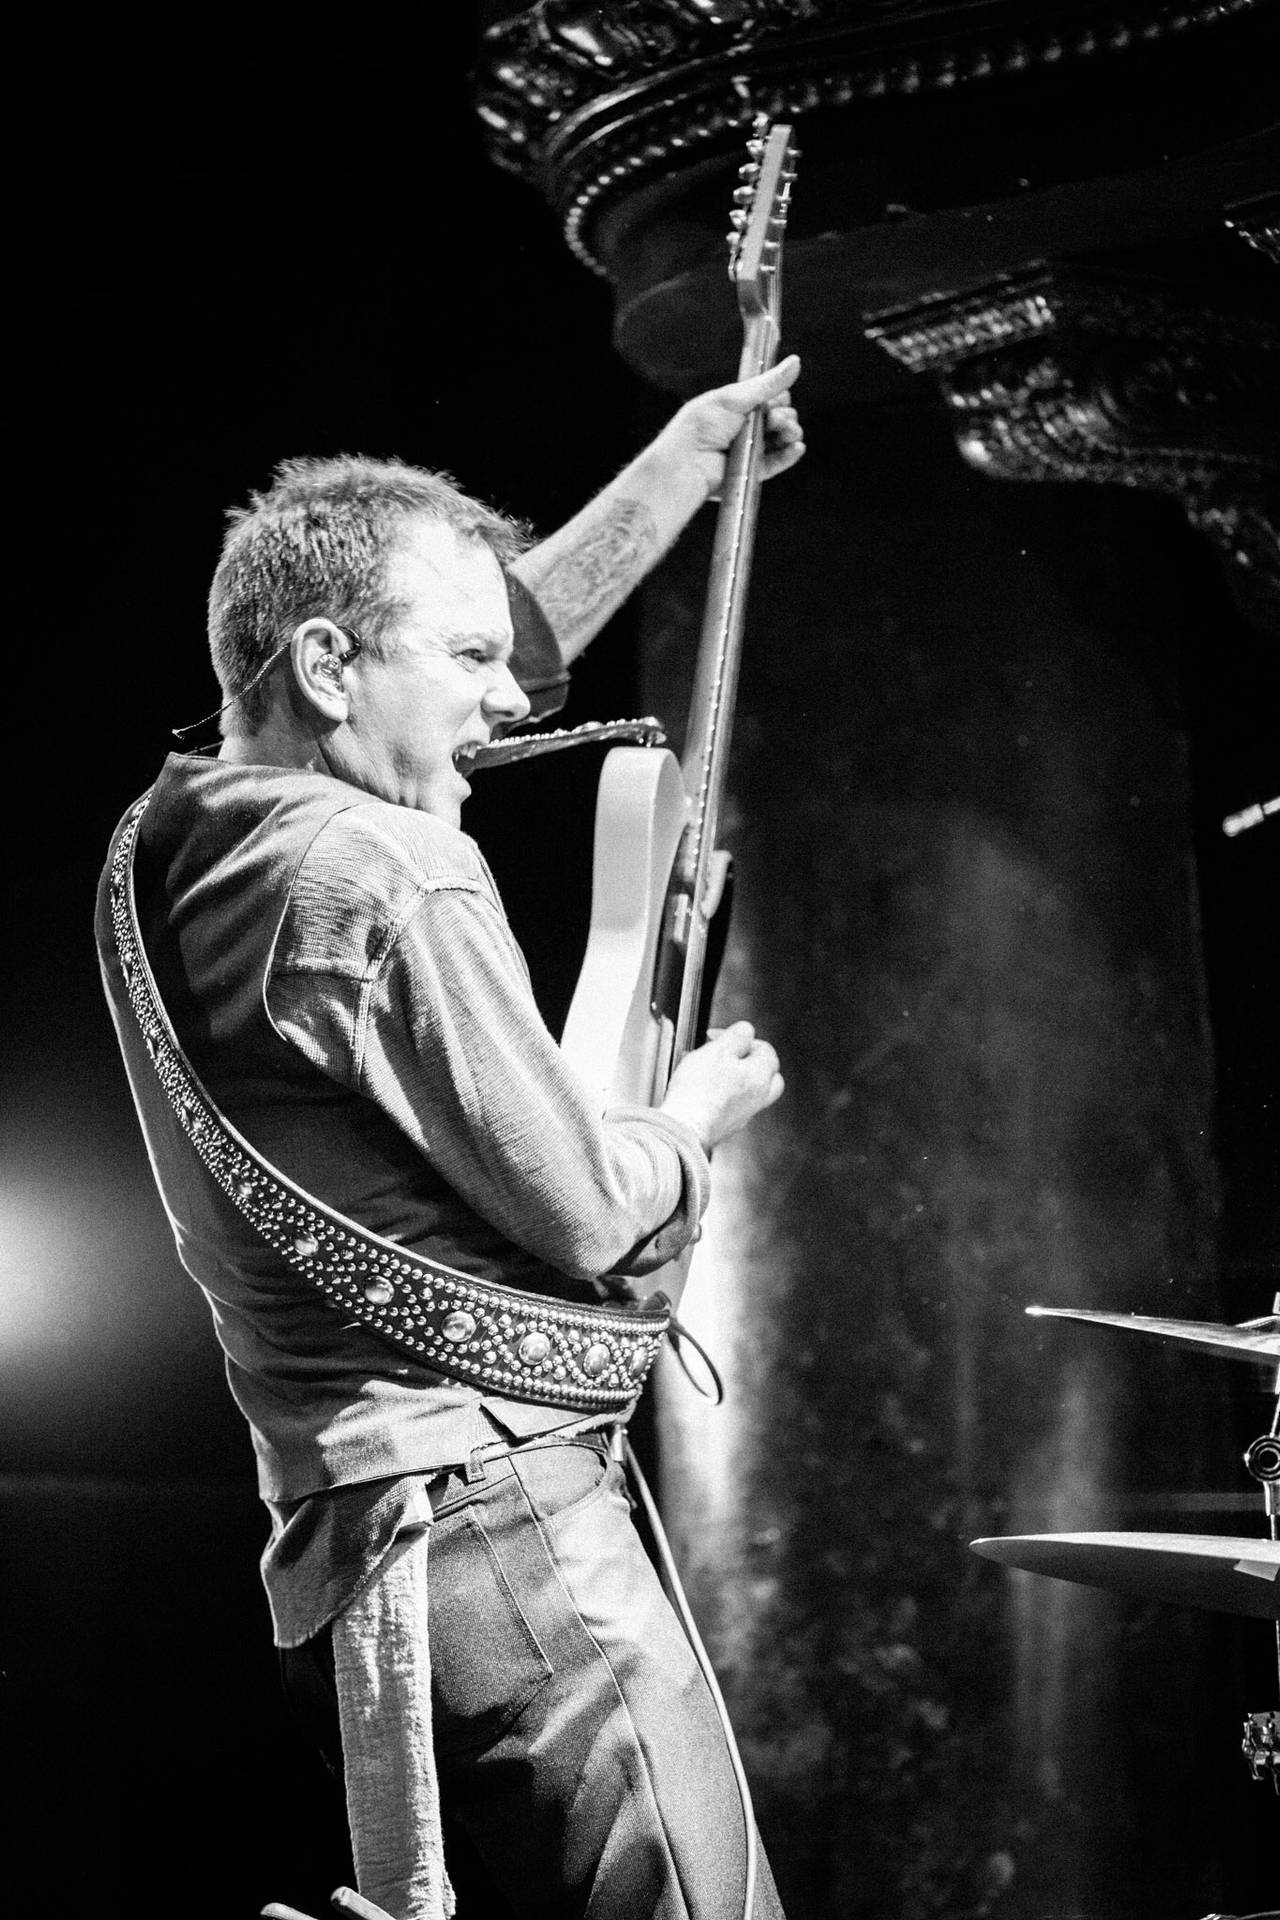 Britisk-kanadisk musiker Kiefer Sutherland, der spiller guitar Wallpaper